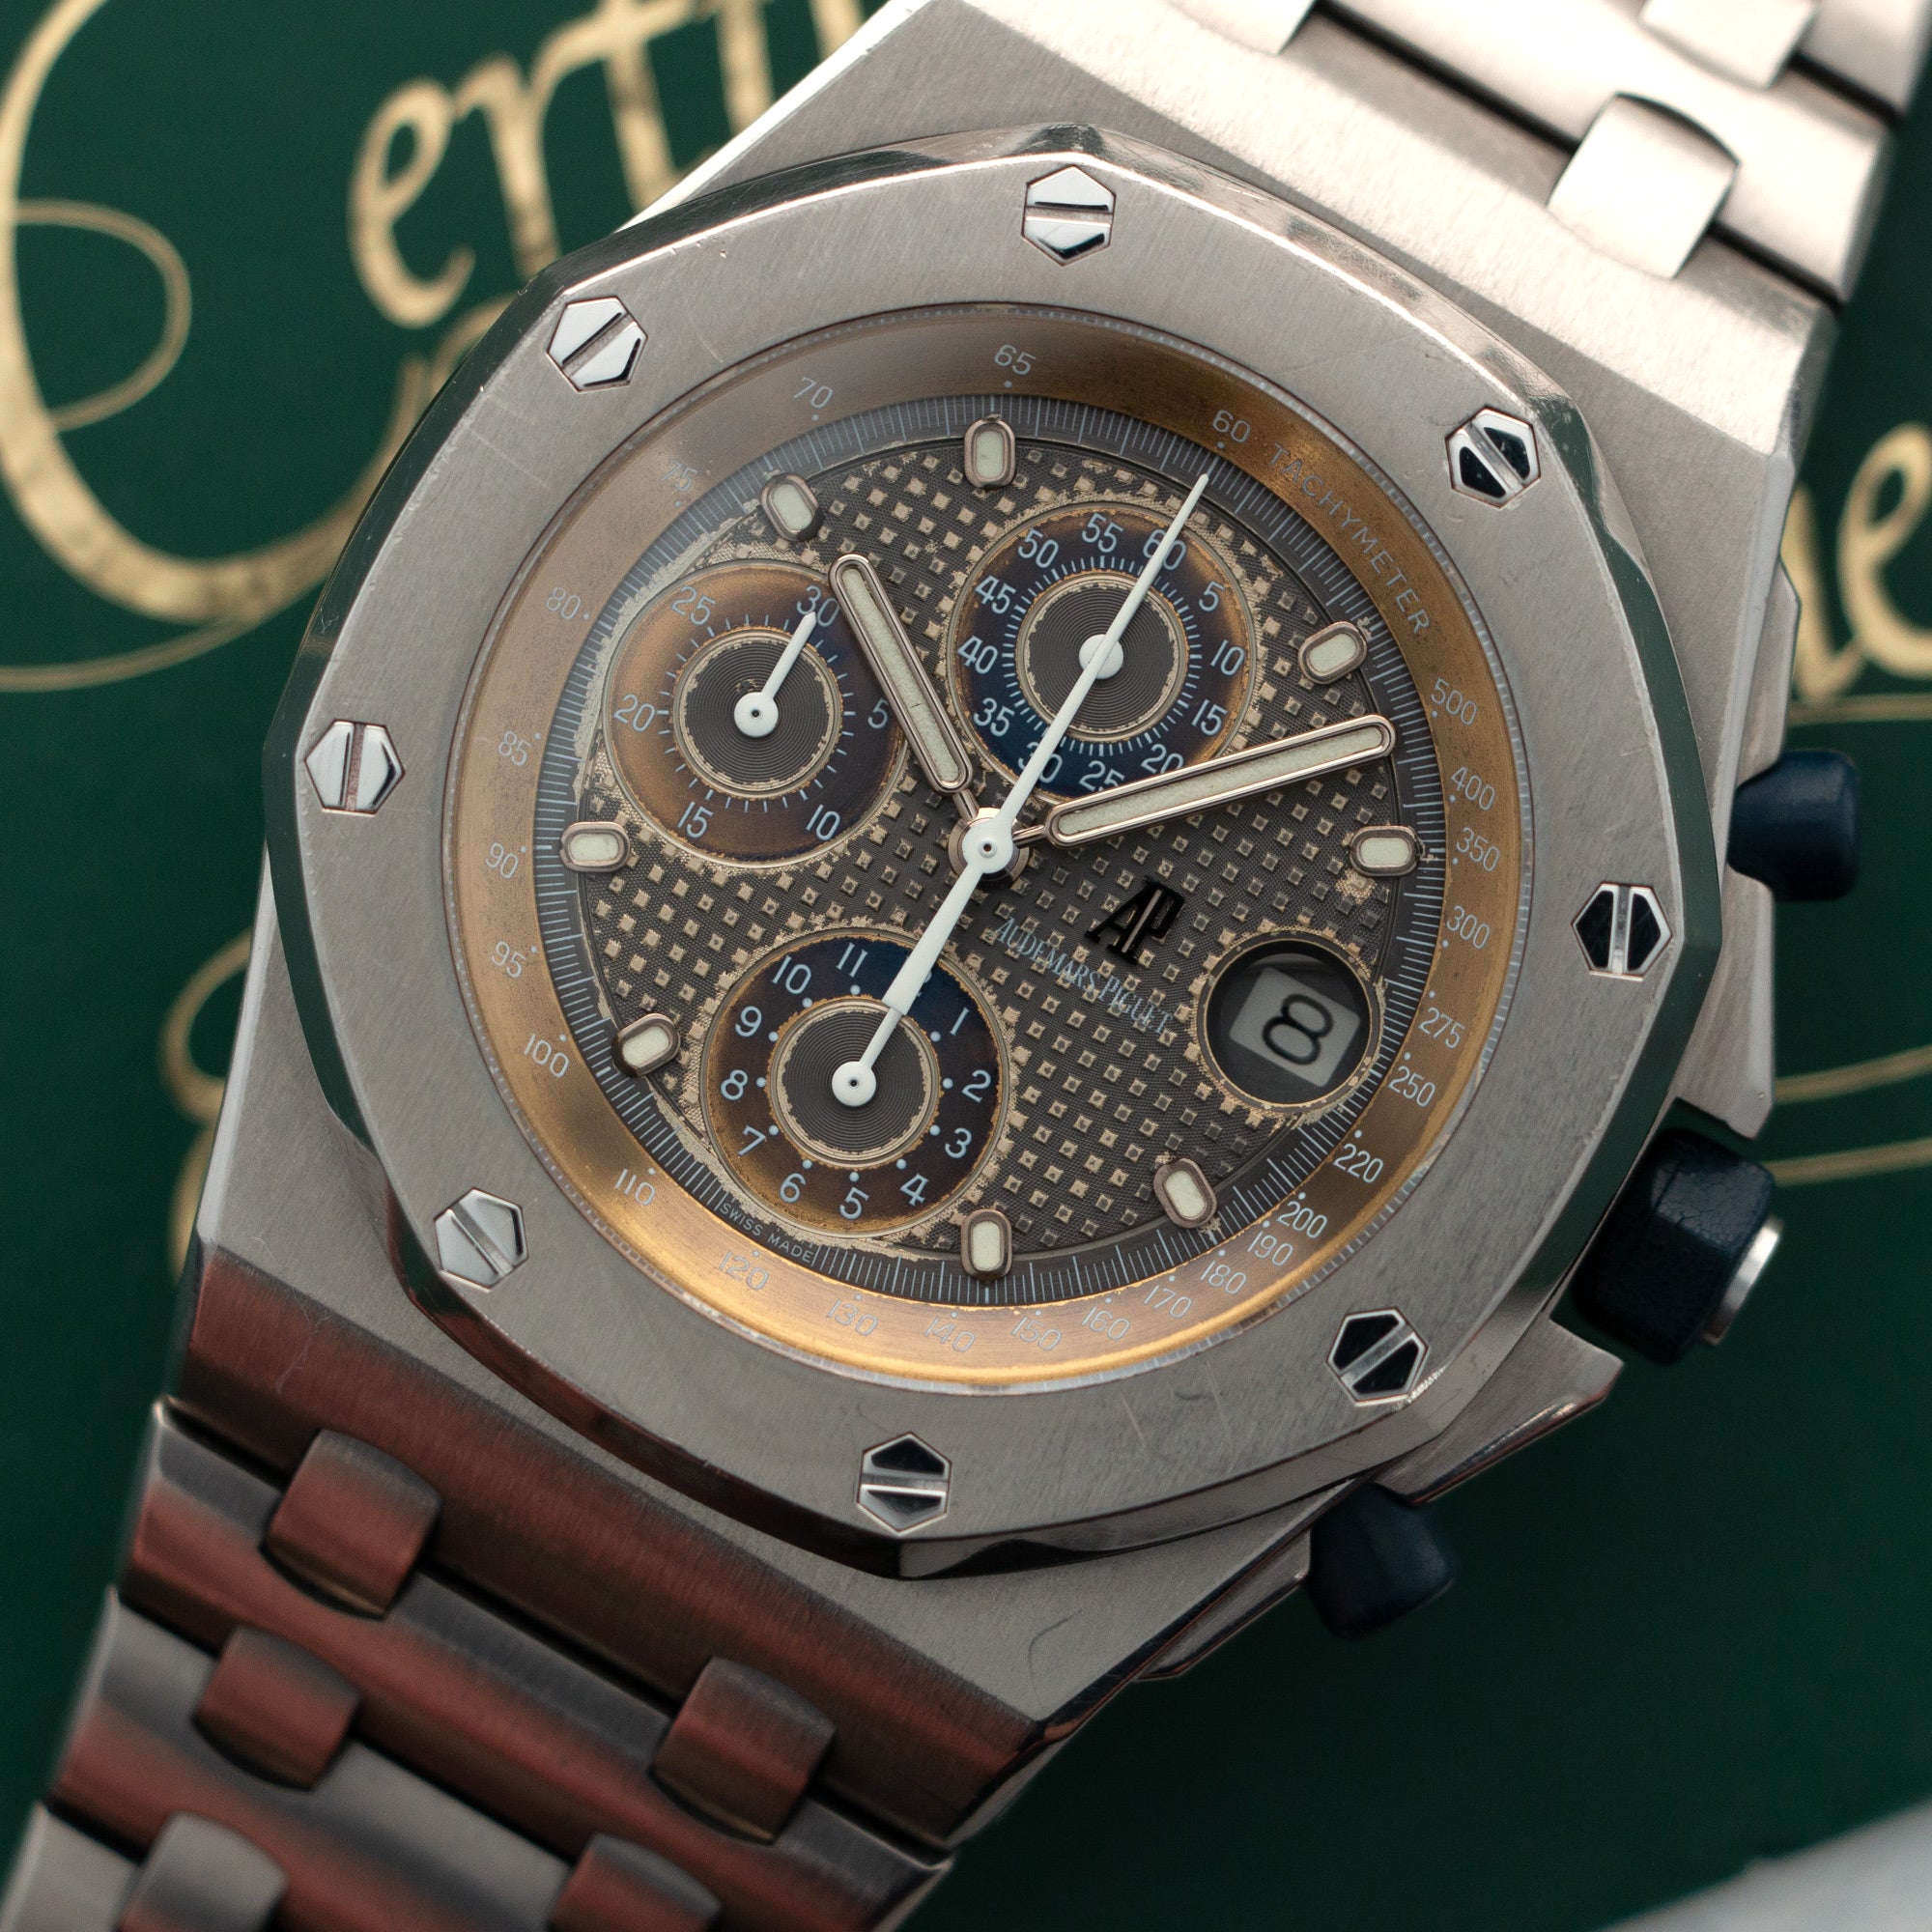 Audemars Piguet - Audemars Piguet Titanium Royal Oak Offshore Ref. 25721 with Tropical Dial Watch - The Keystone Watches